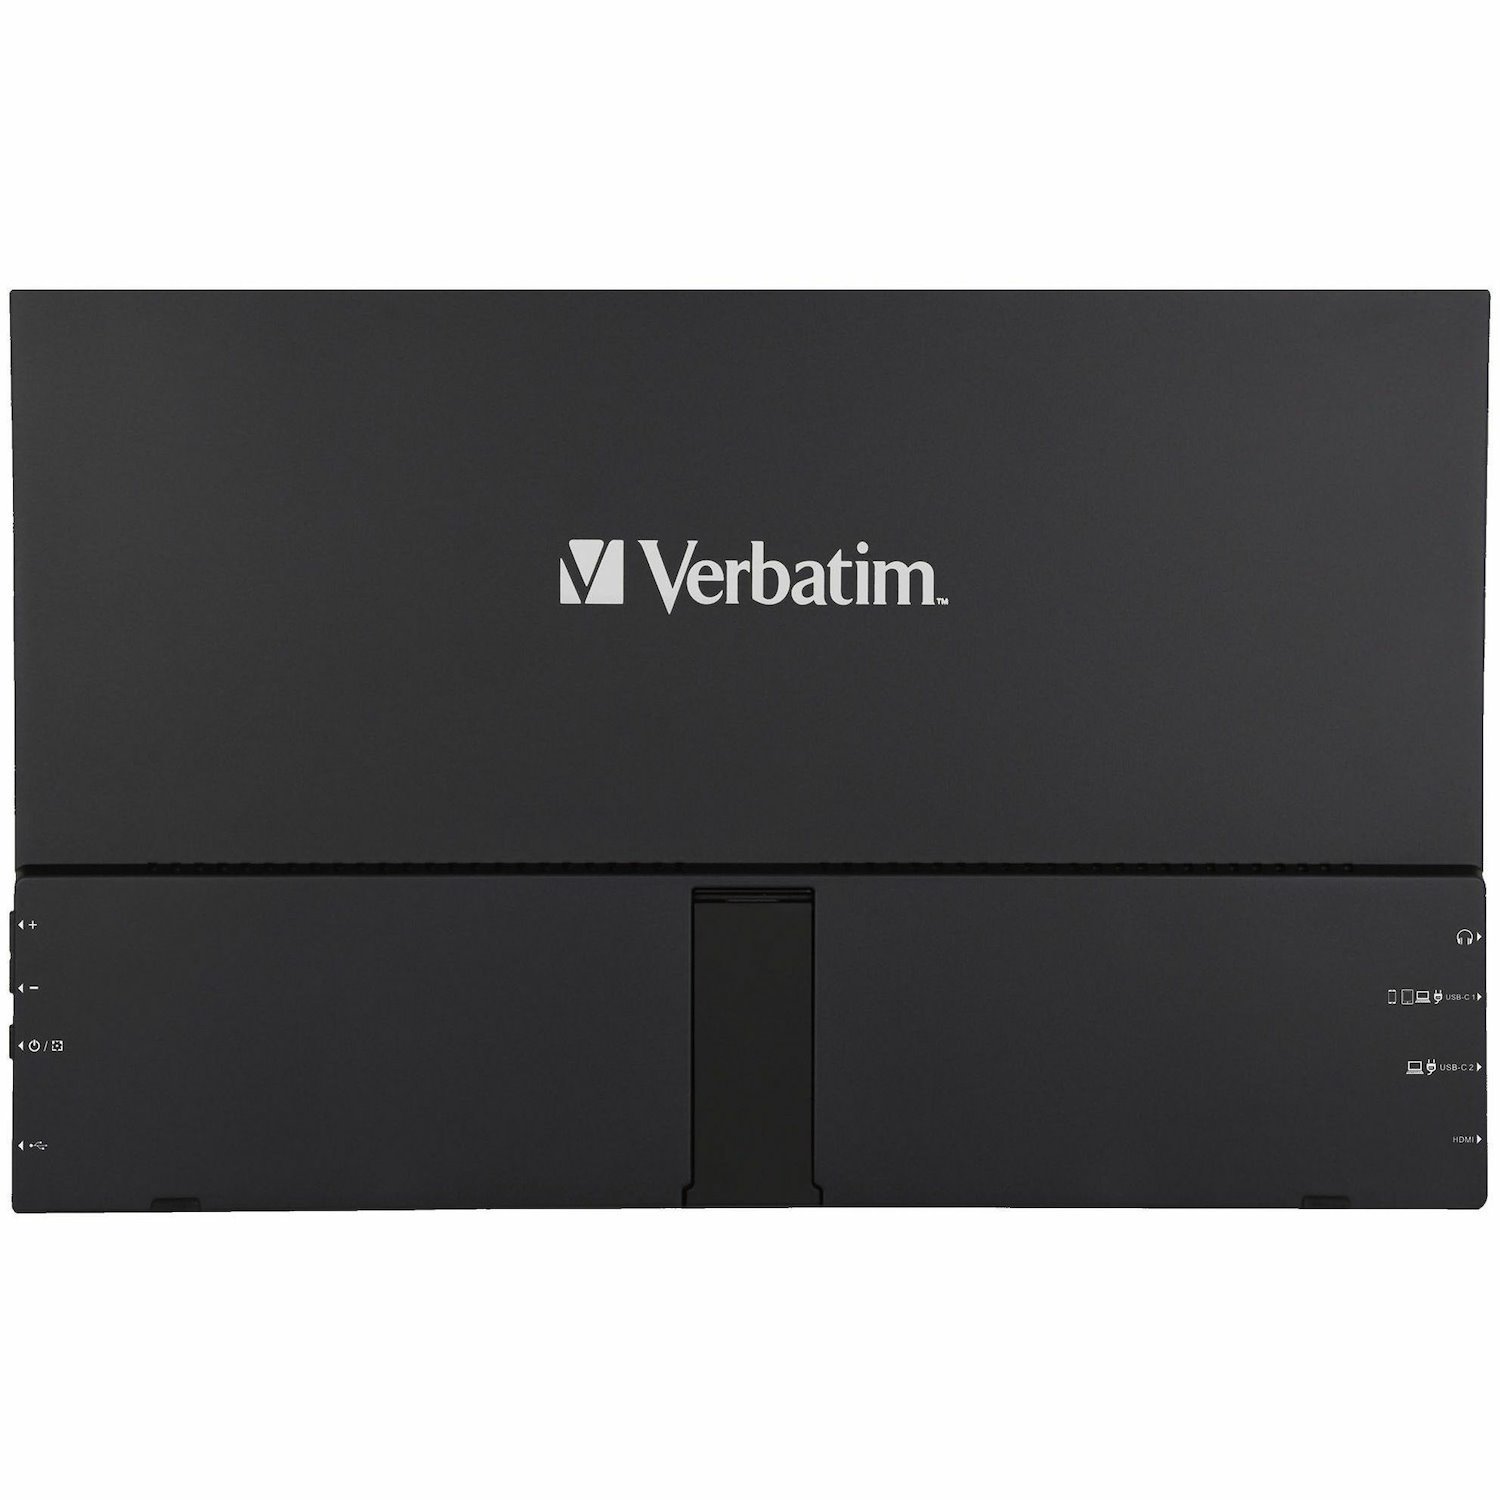 Verbatim Portable Touchscreen Monitor Full HD 1080p 14" Metal Housing